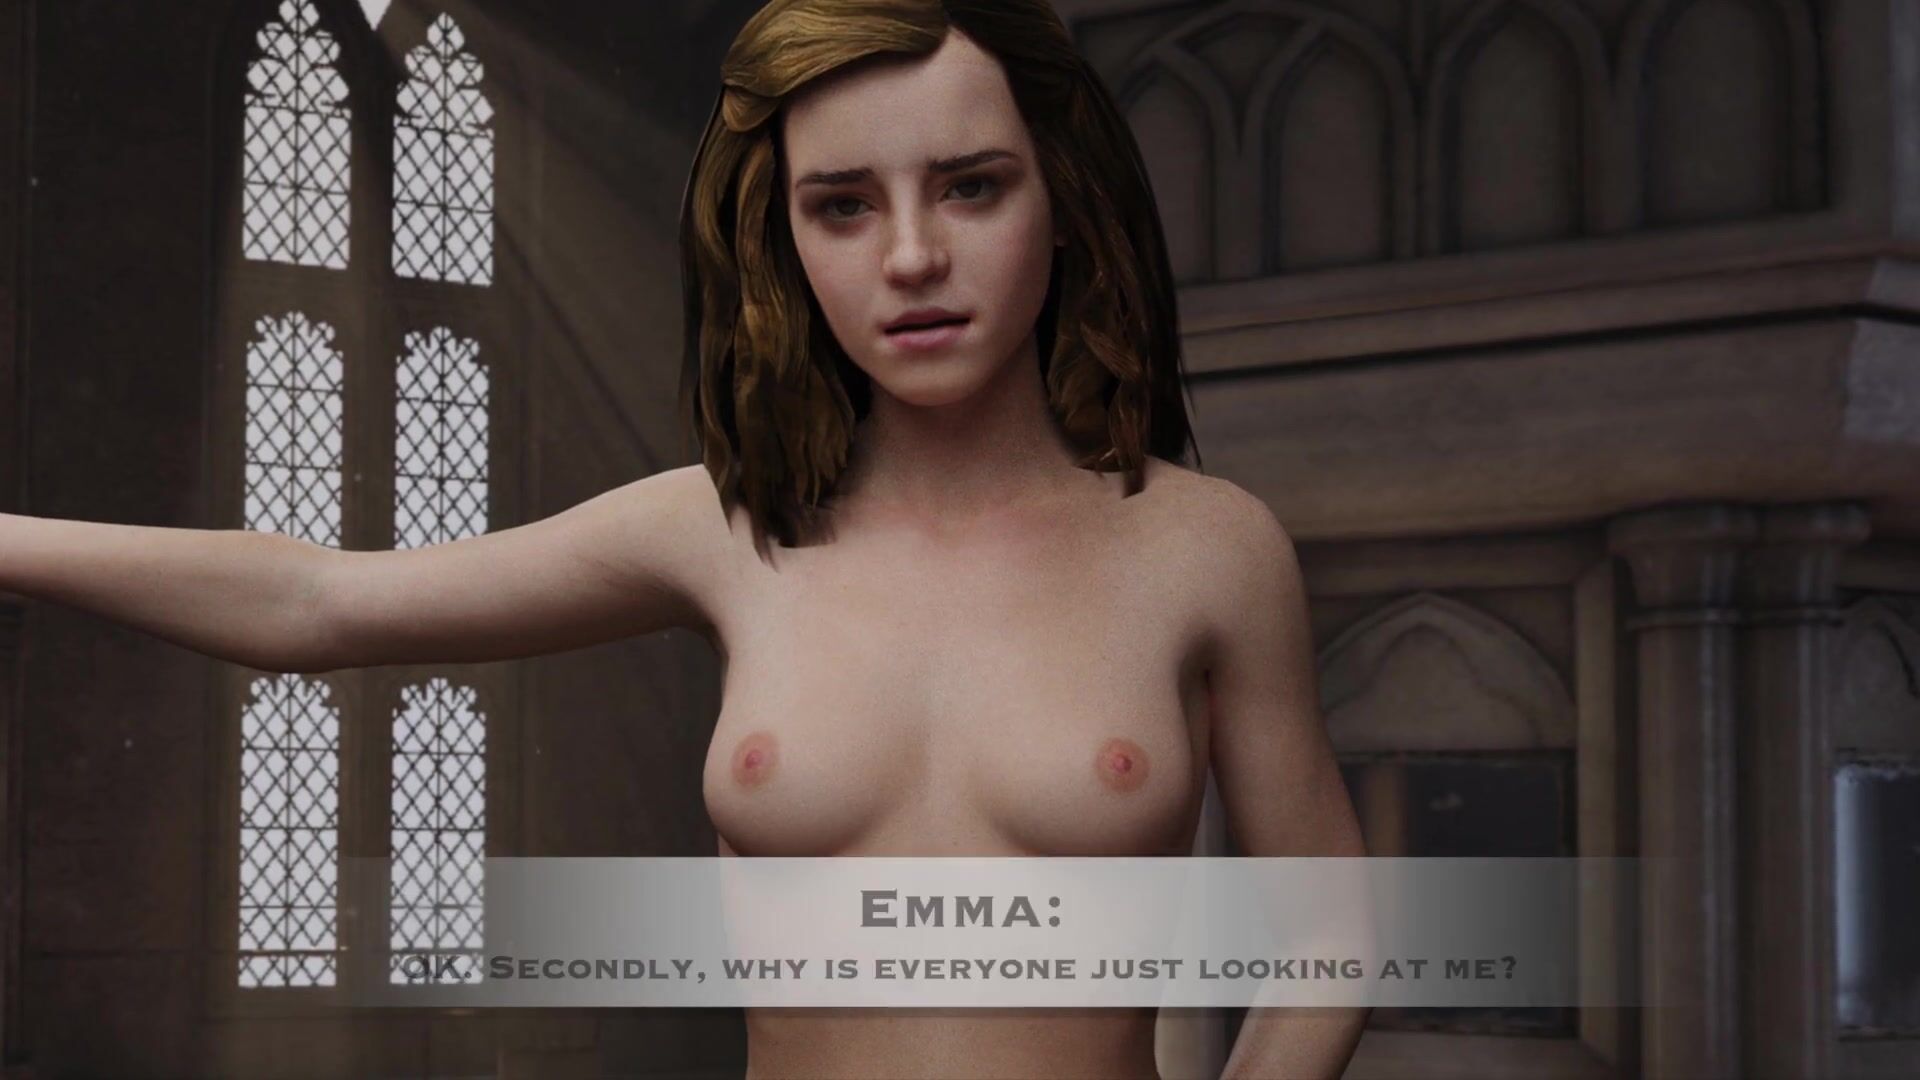 Harry Potter 3d Porn Videos - After 'Harry Potter' Emma Watson Starred In Porn (Parody 3D Cartoon) -  FAPCAT